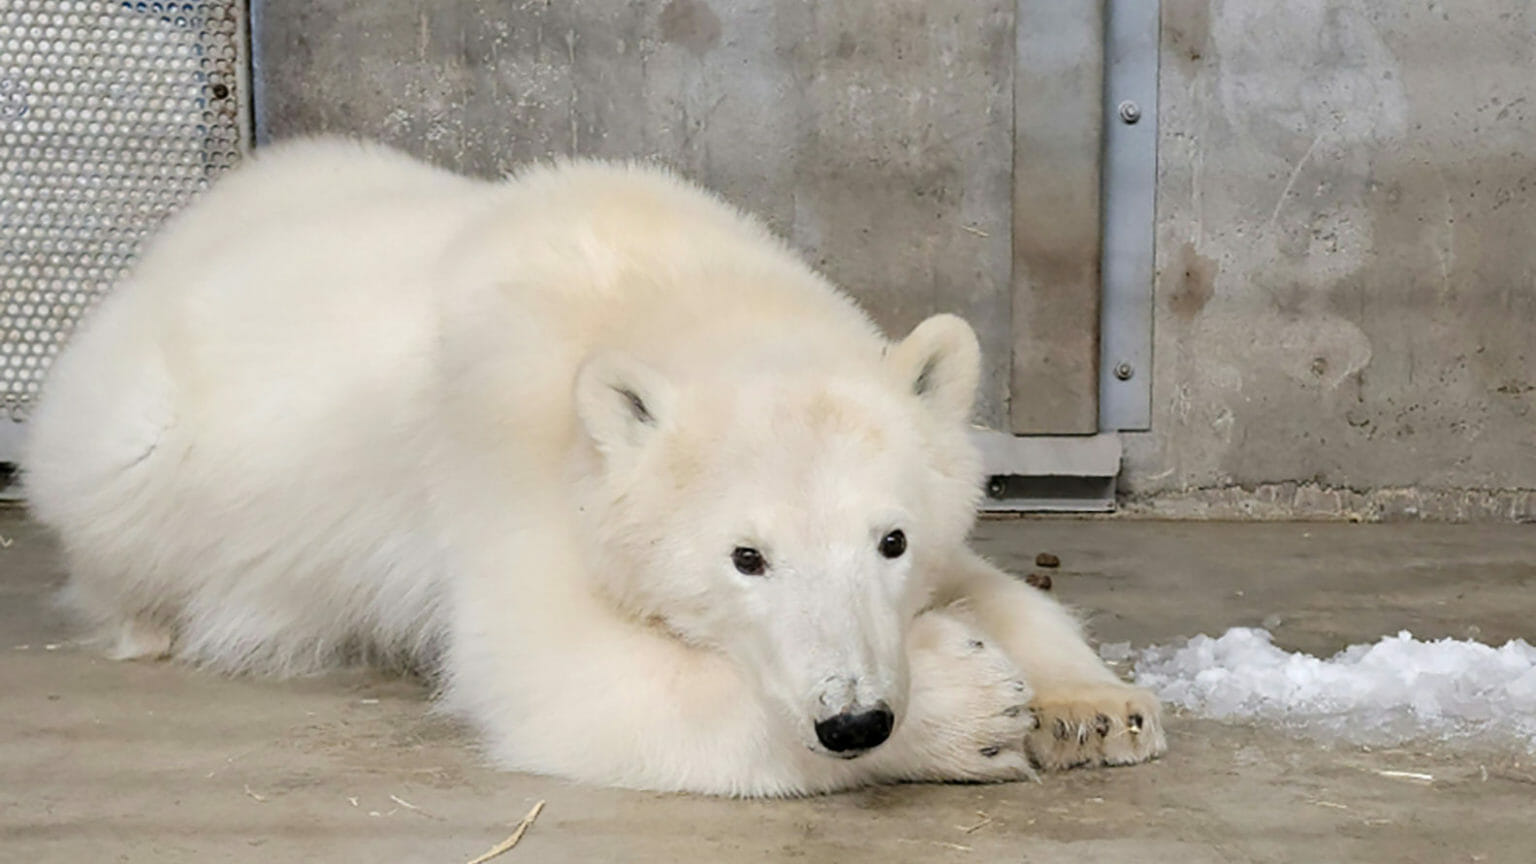 Alaska zoo takes in orphaned Prudhoe Bay polar bear cub